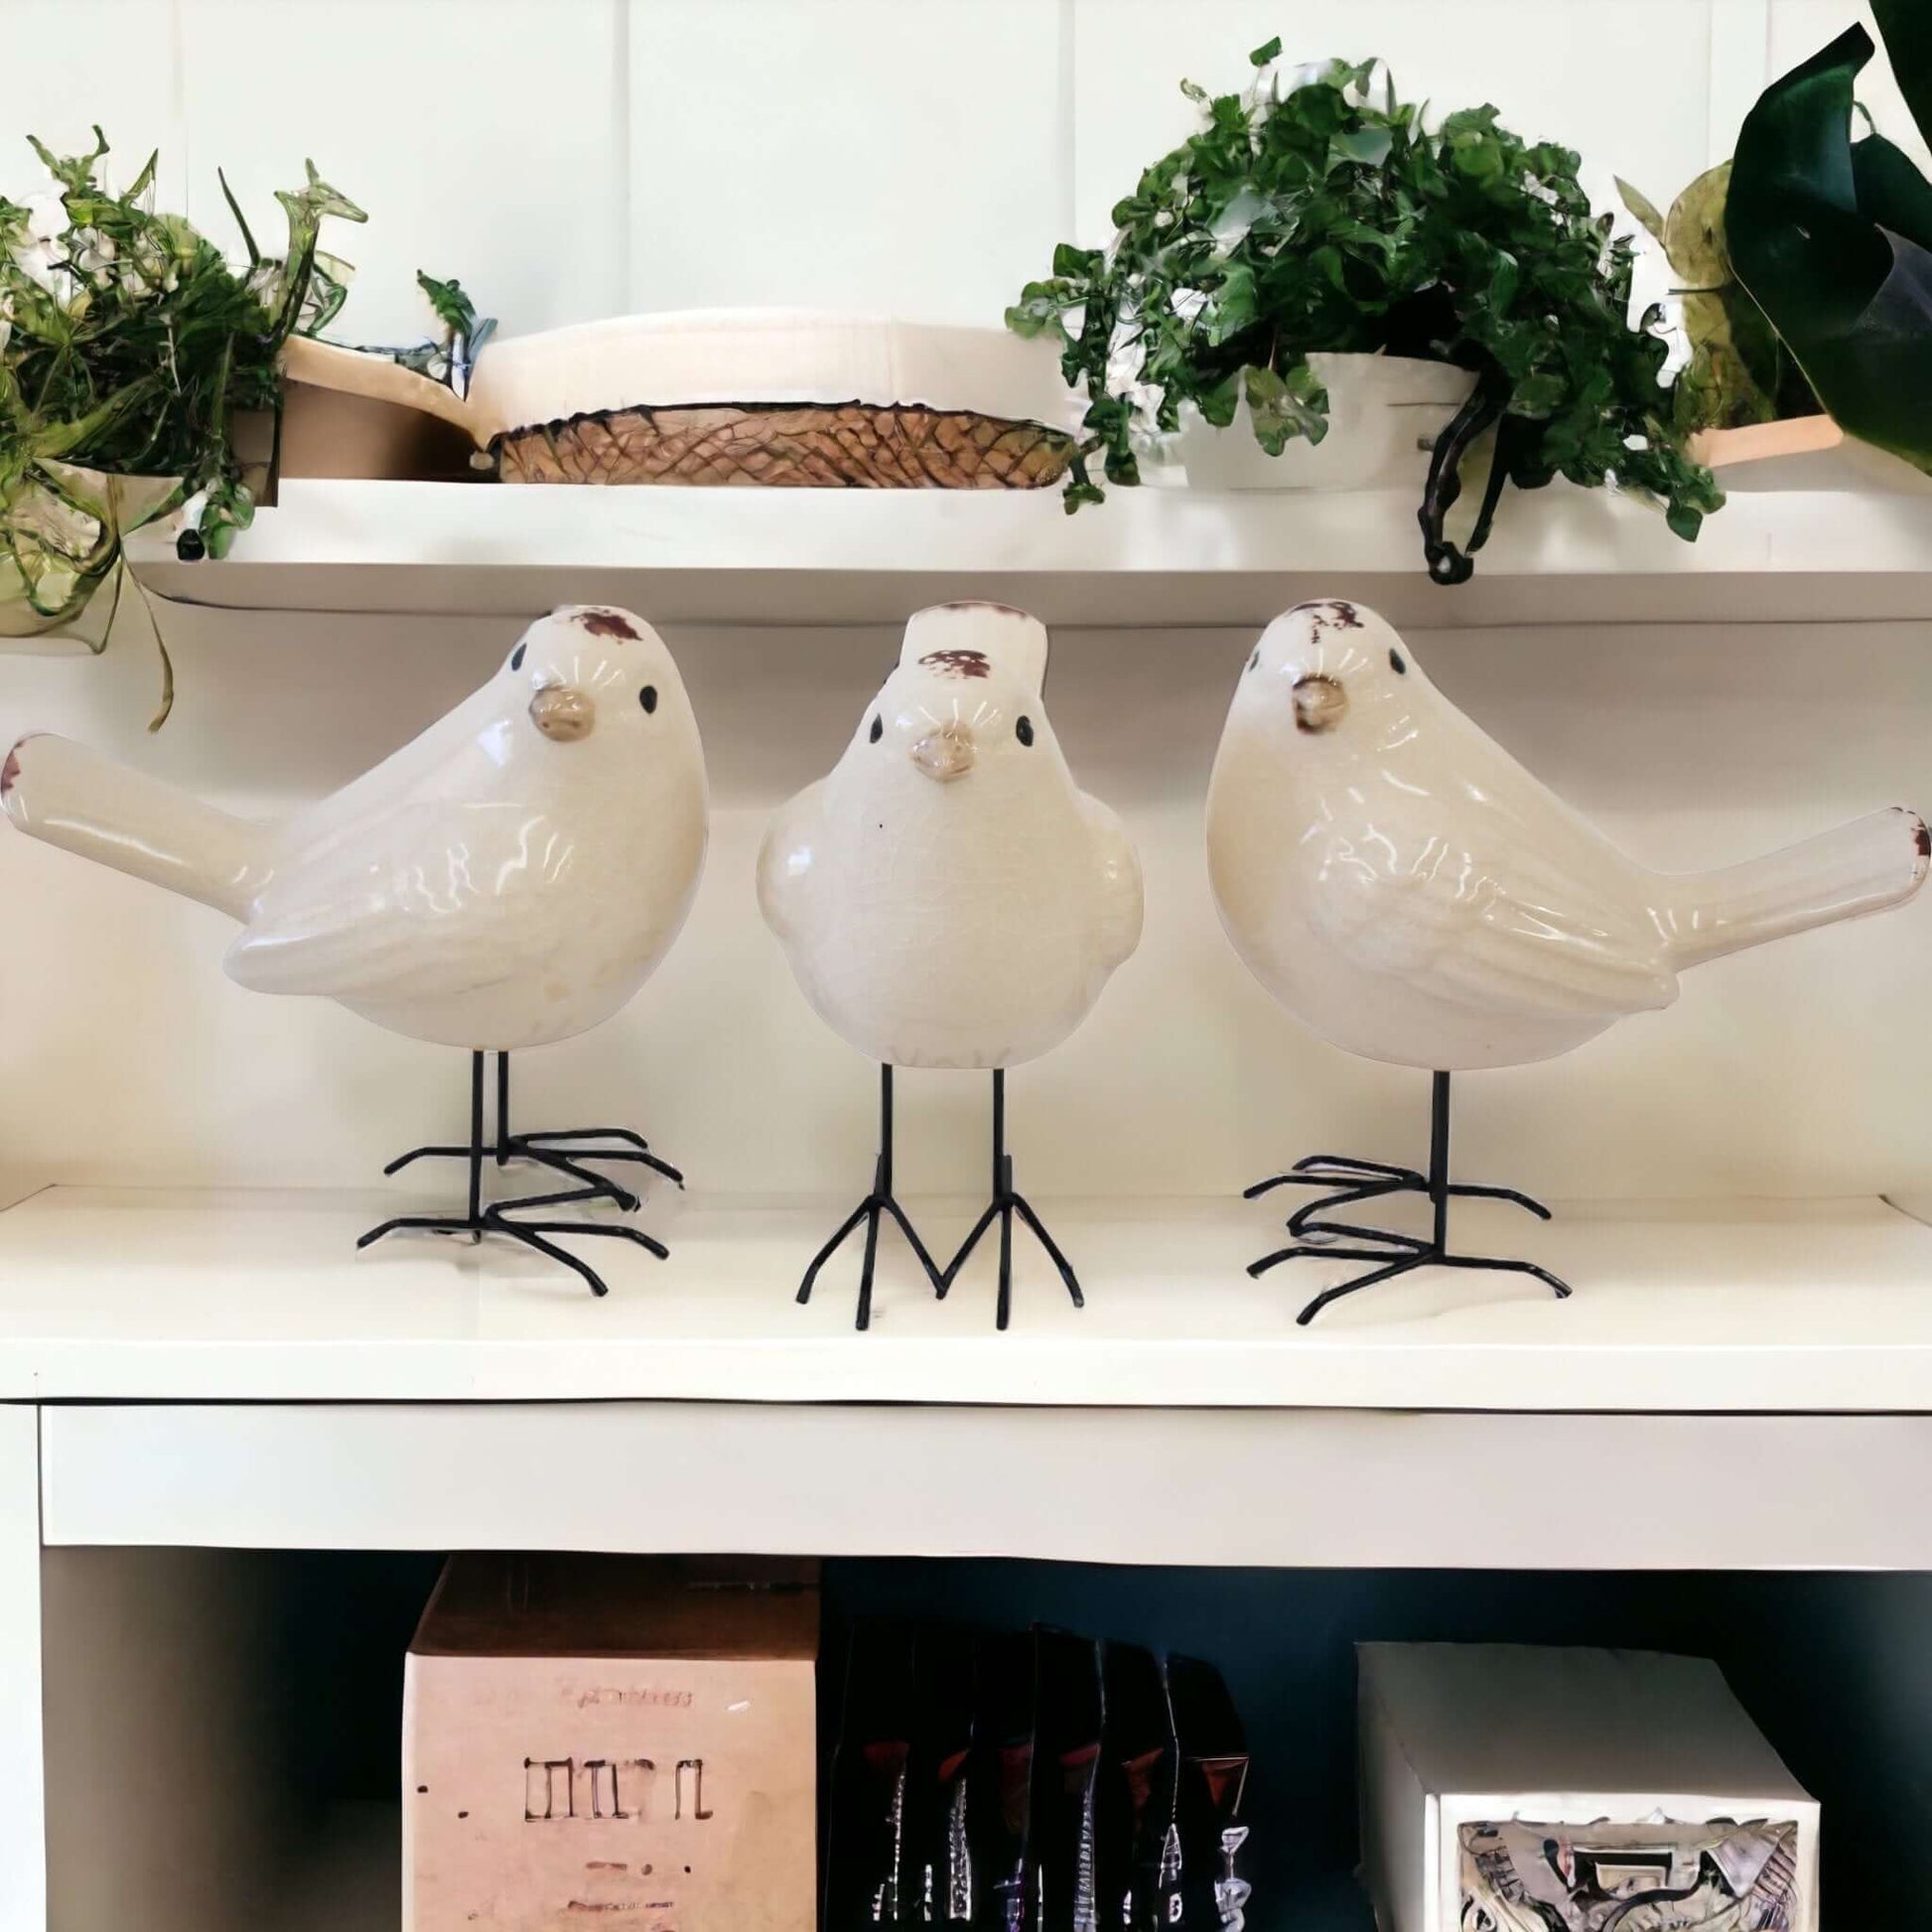 Bird Birds White Legs Décor Set Of 3 - The Renmy Store Homewares & Gifts 